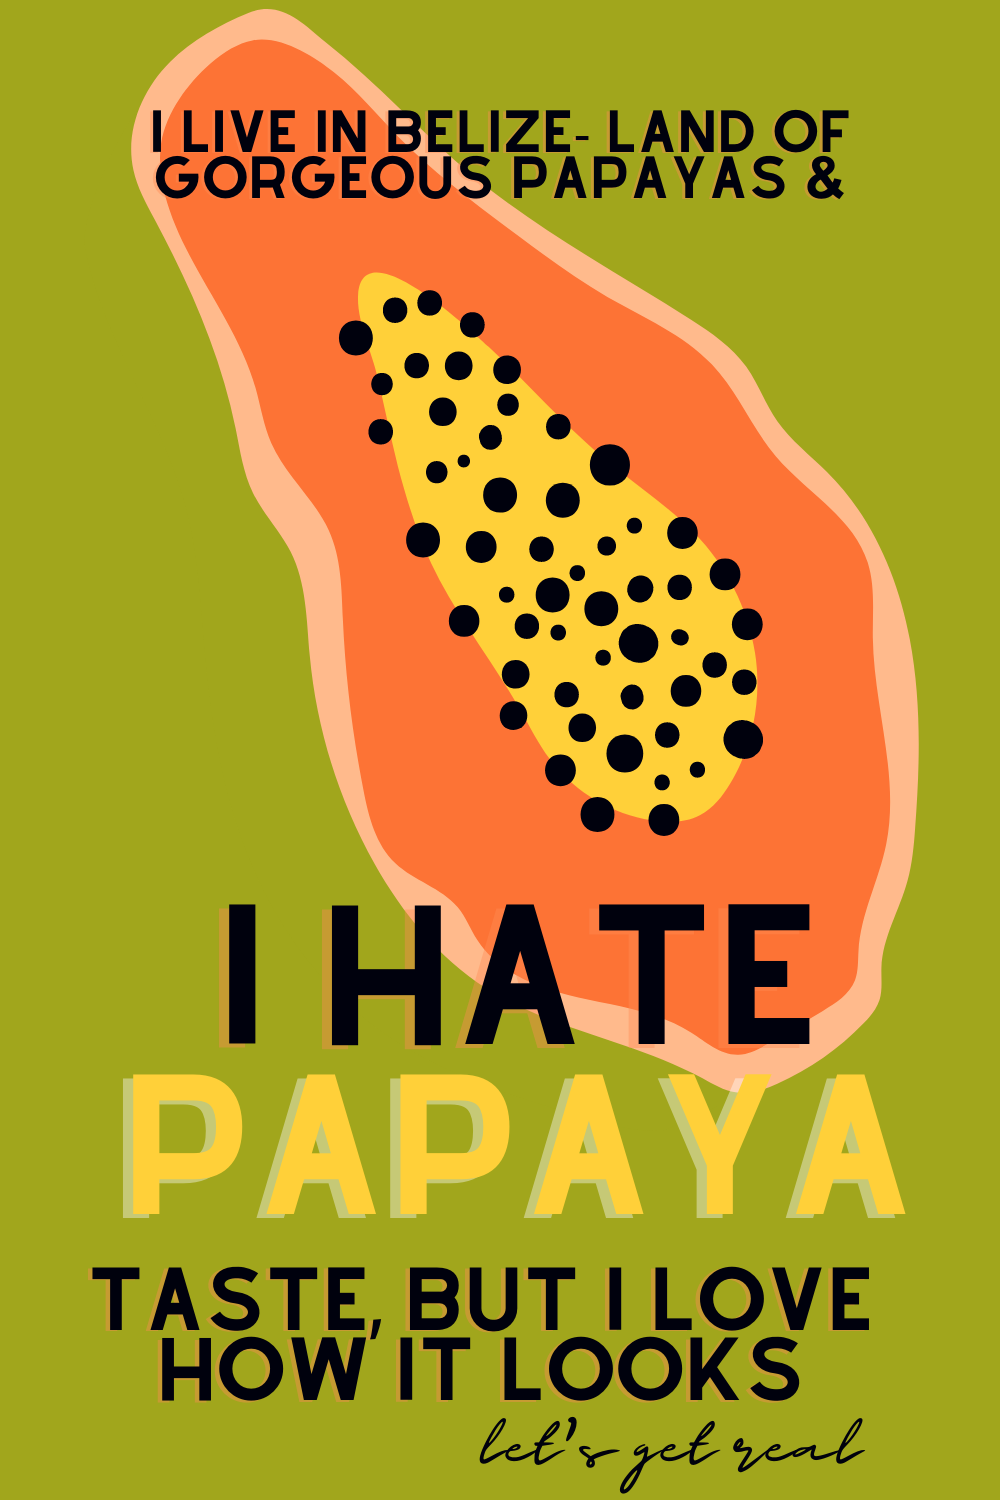 I hate papaya